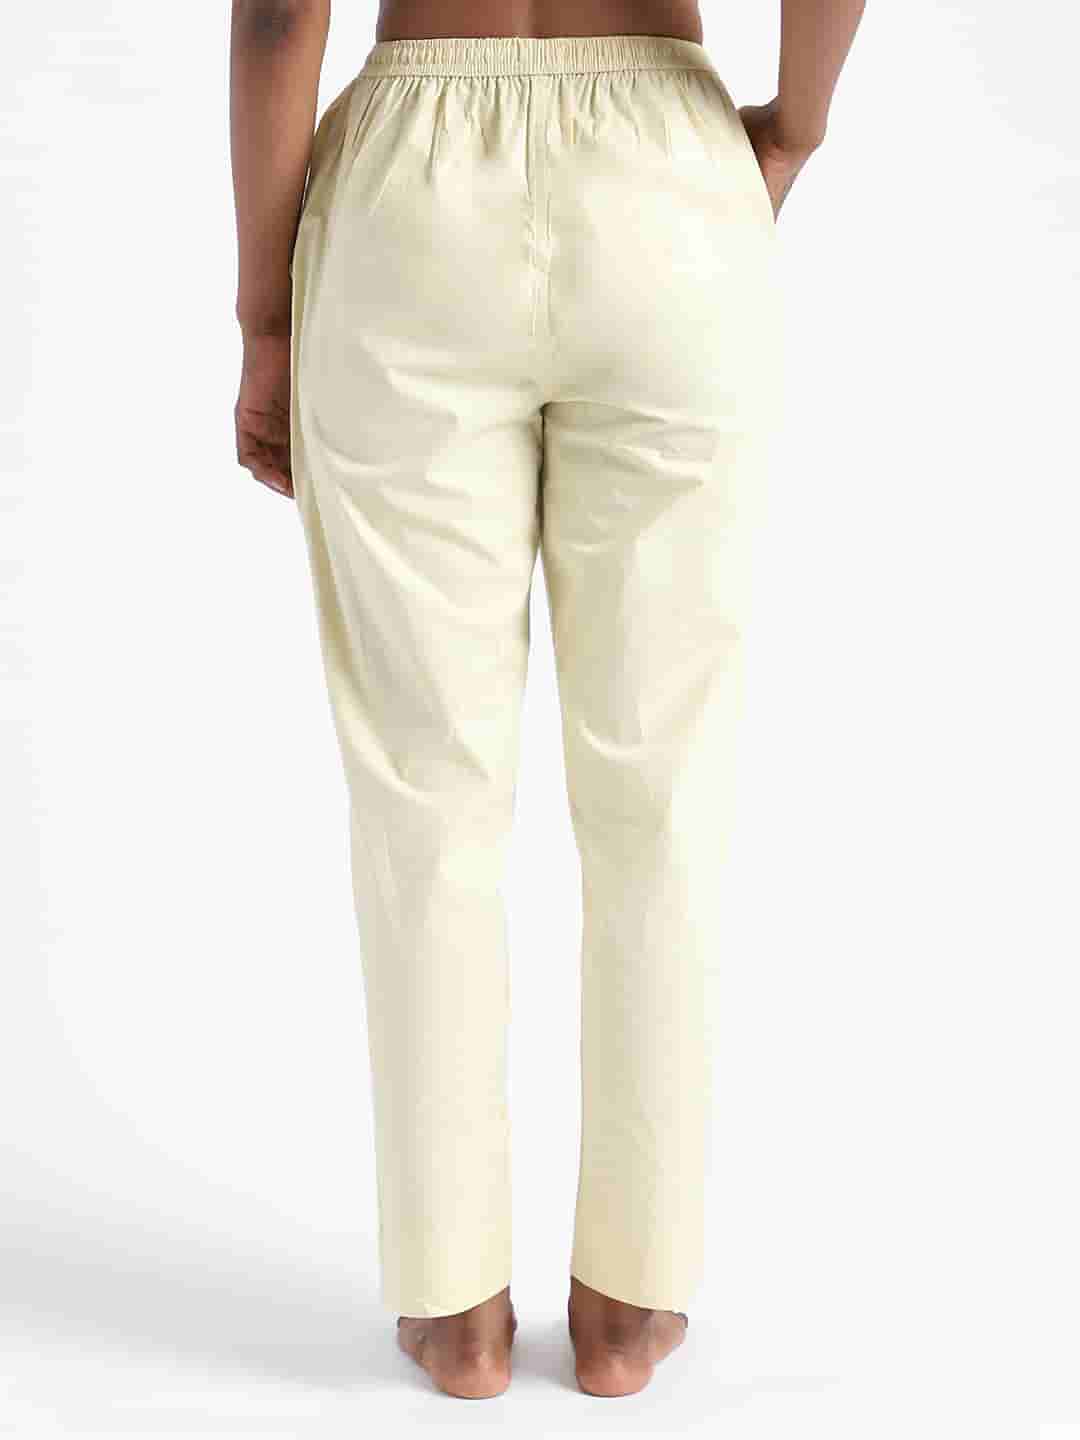 Organic Cotton & Natural Dyed Women’s Lemon Yellow Color Slim Fit Pant by Livbio